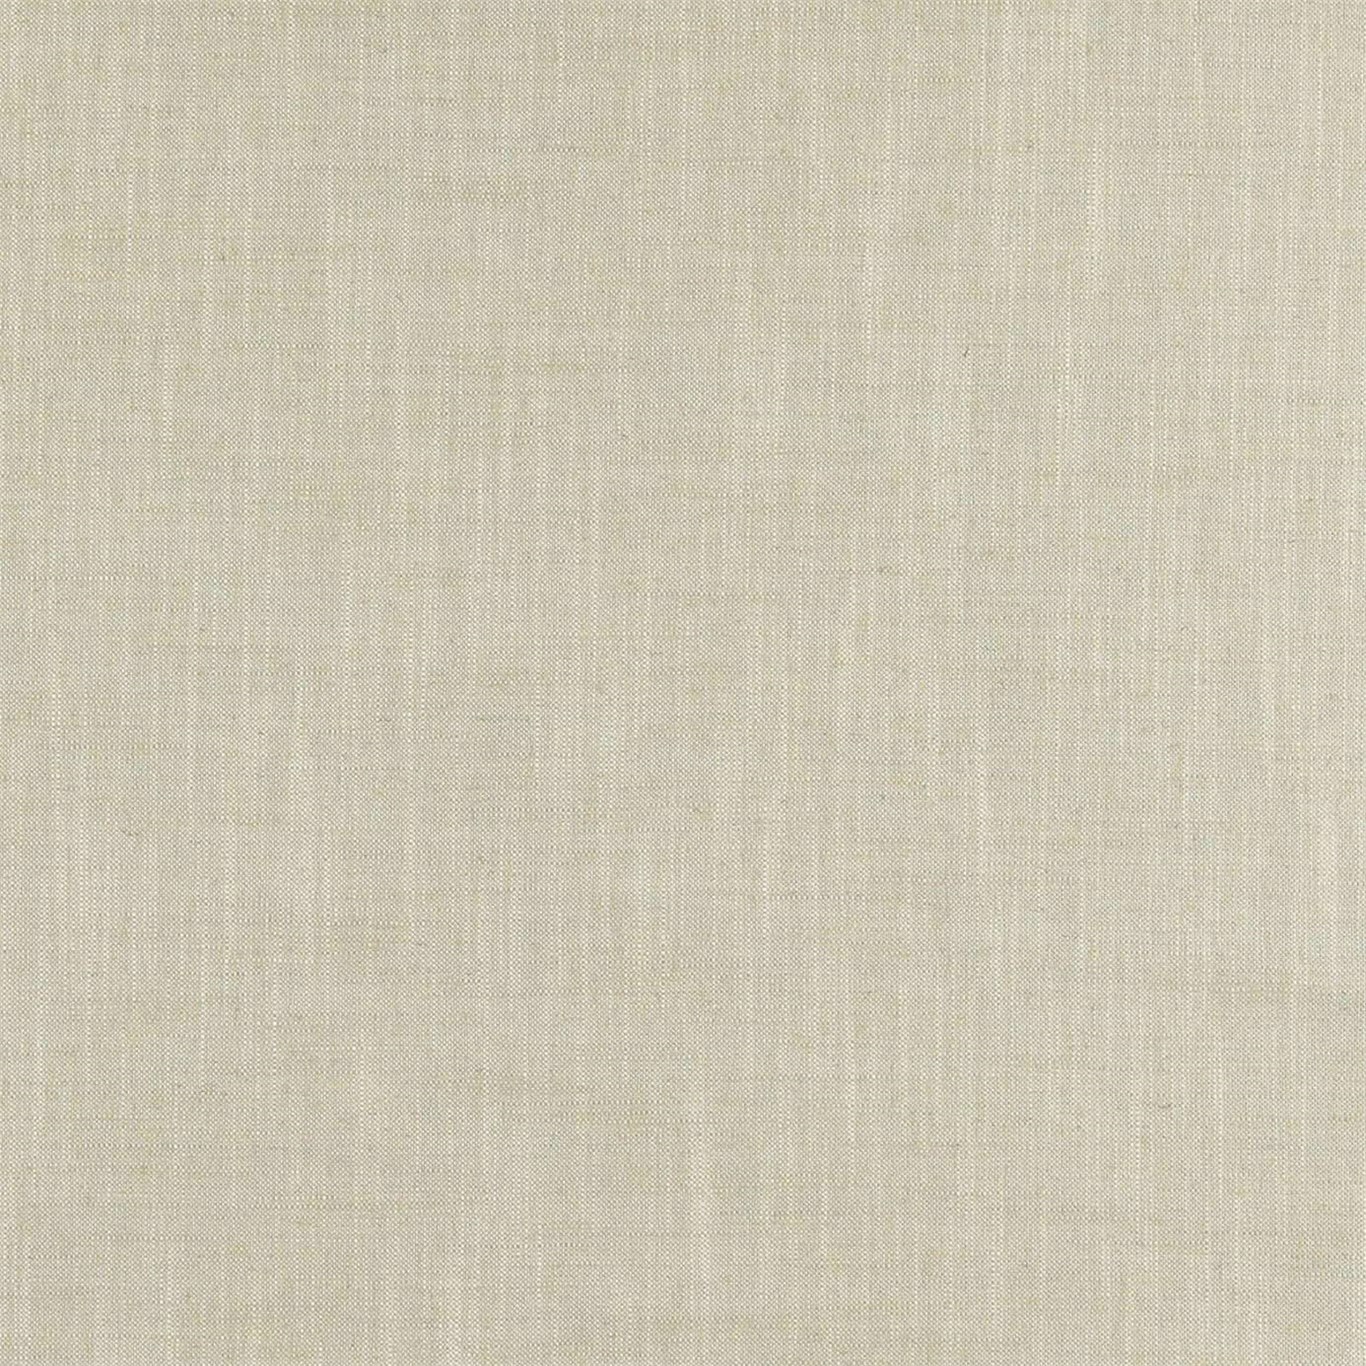 Apley Antique Linen Fabric by SAN